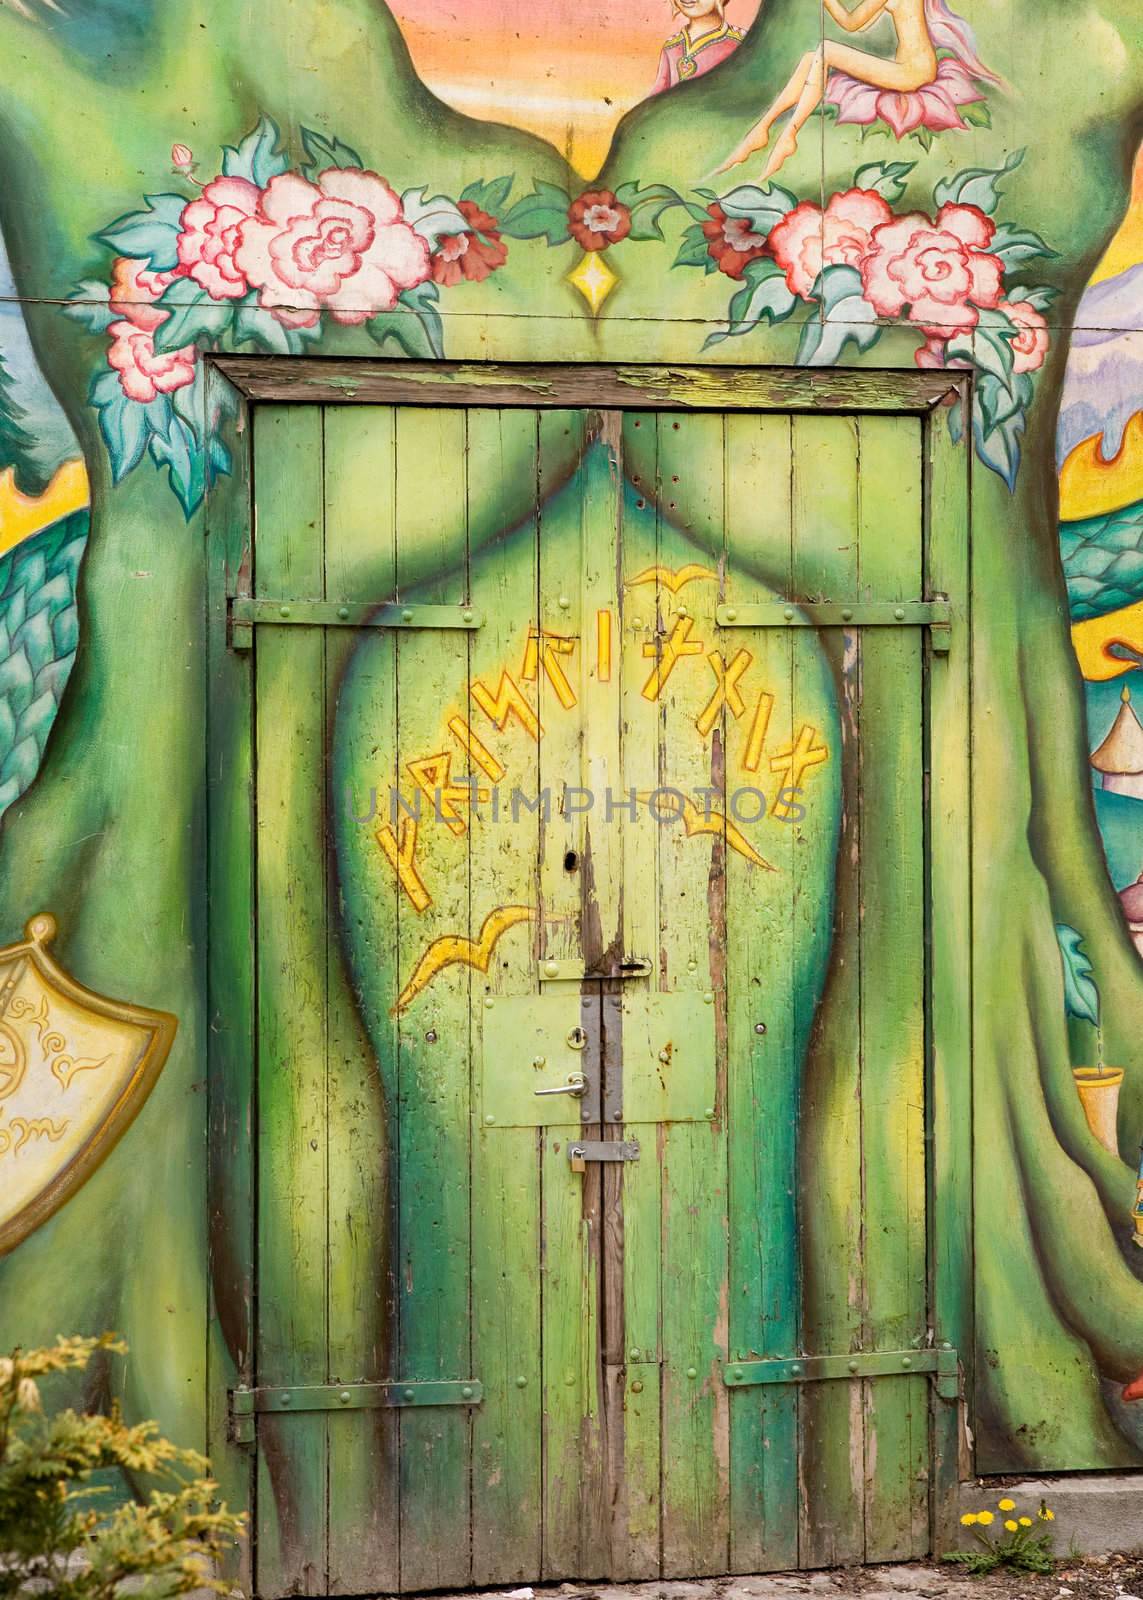 A detail of a door in Christiania - an occupied area of Copenhagen, Denmark